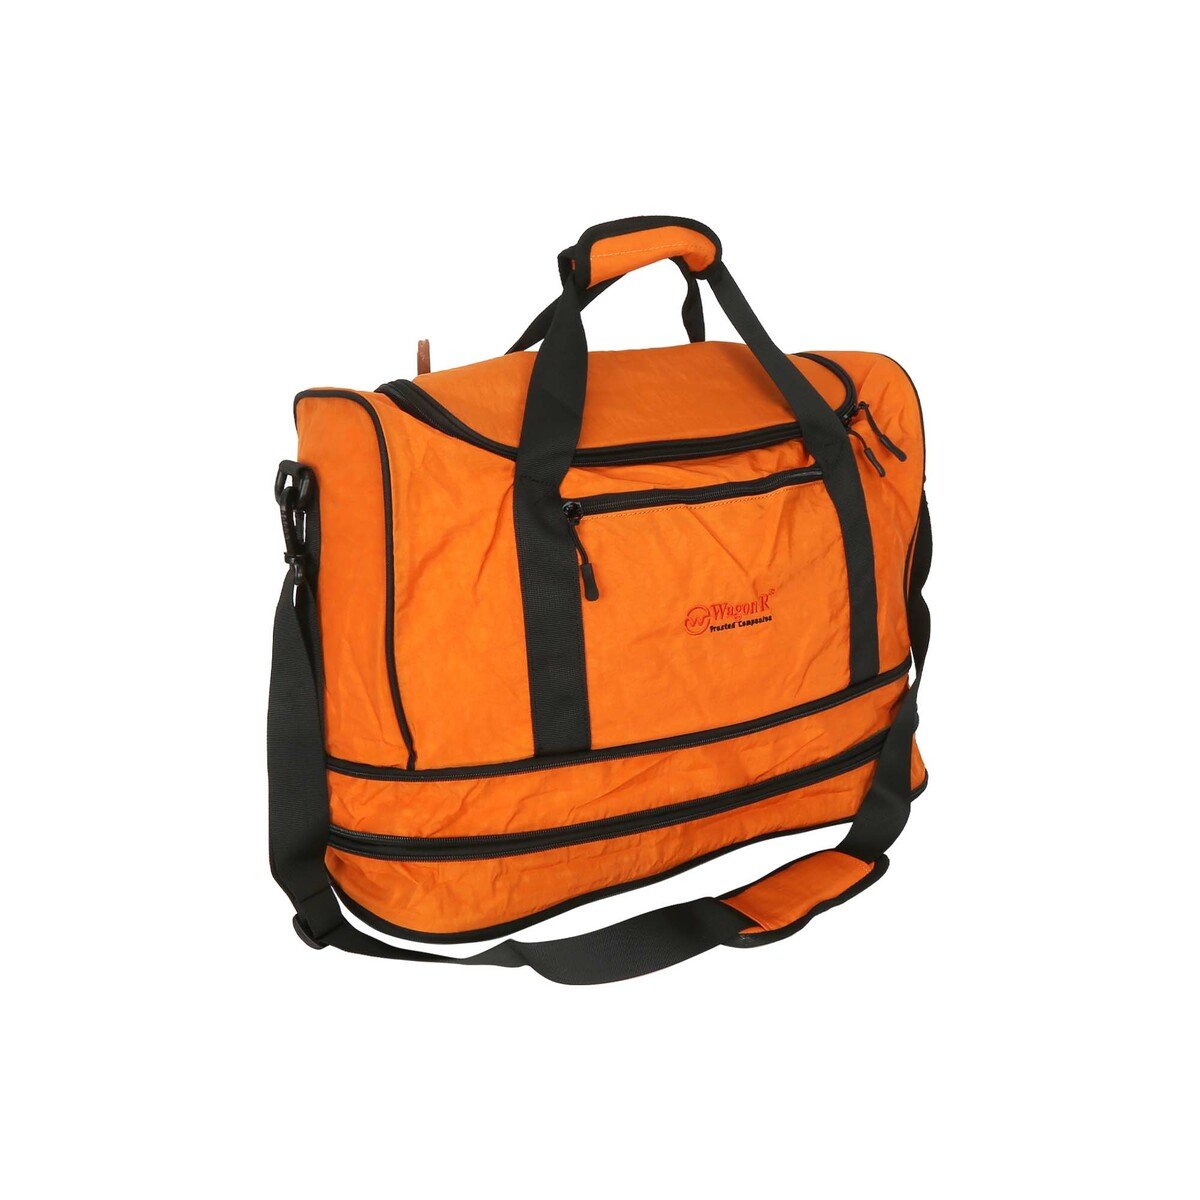 Wagon R Expandable Travel Bag, 49cm, DF1501